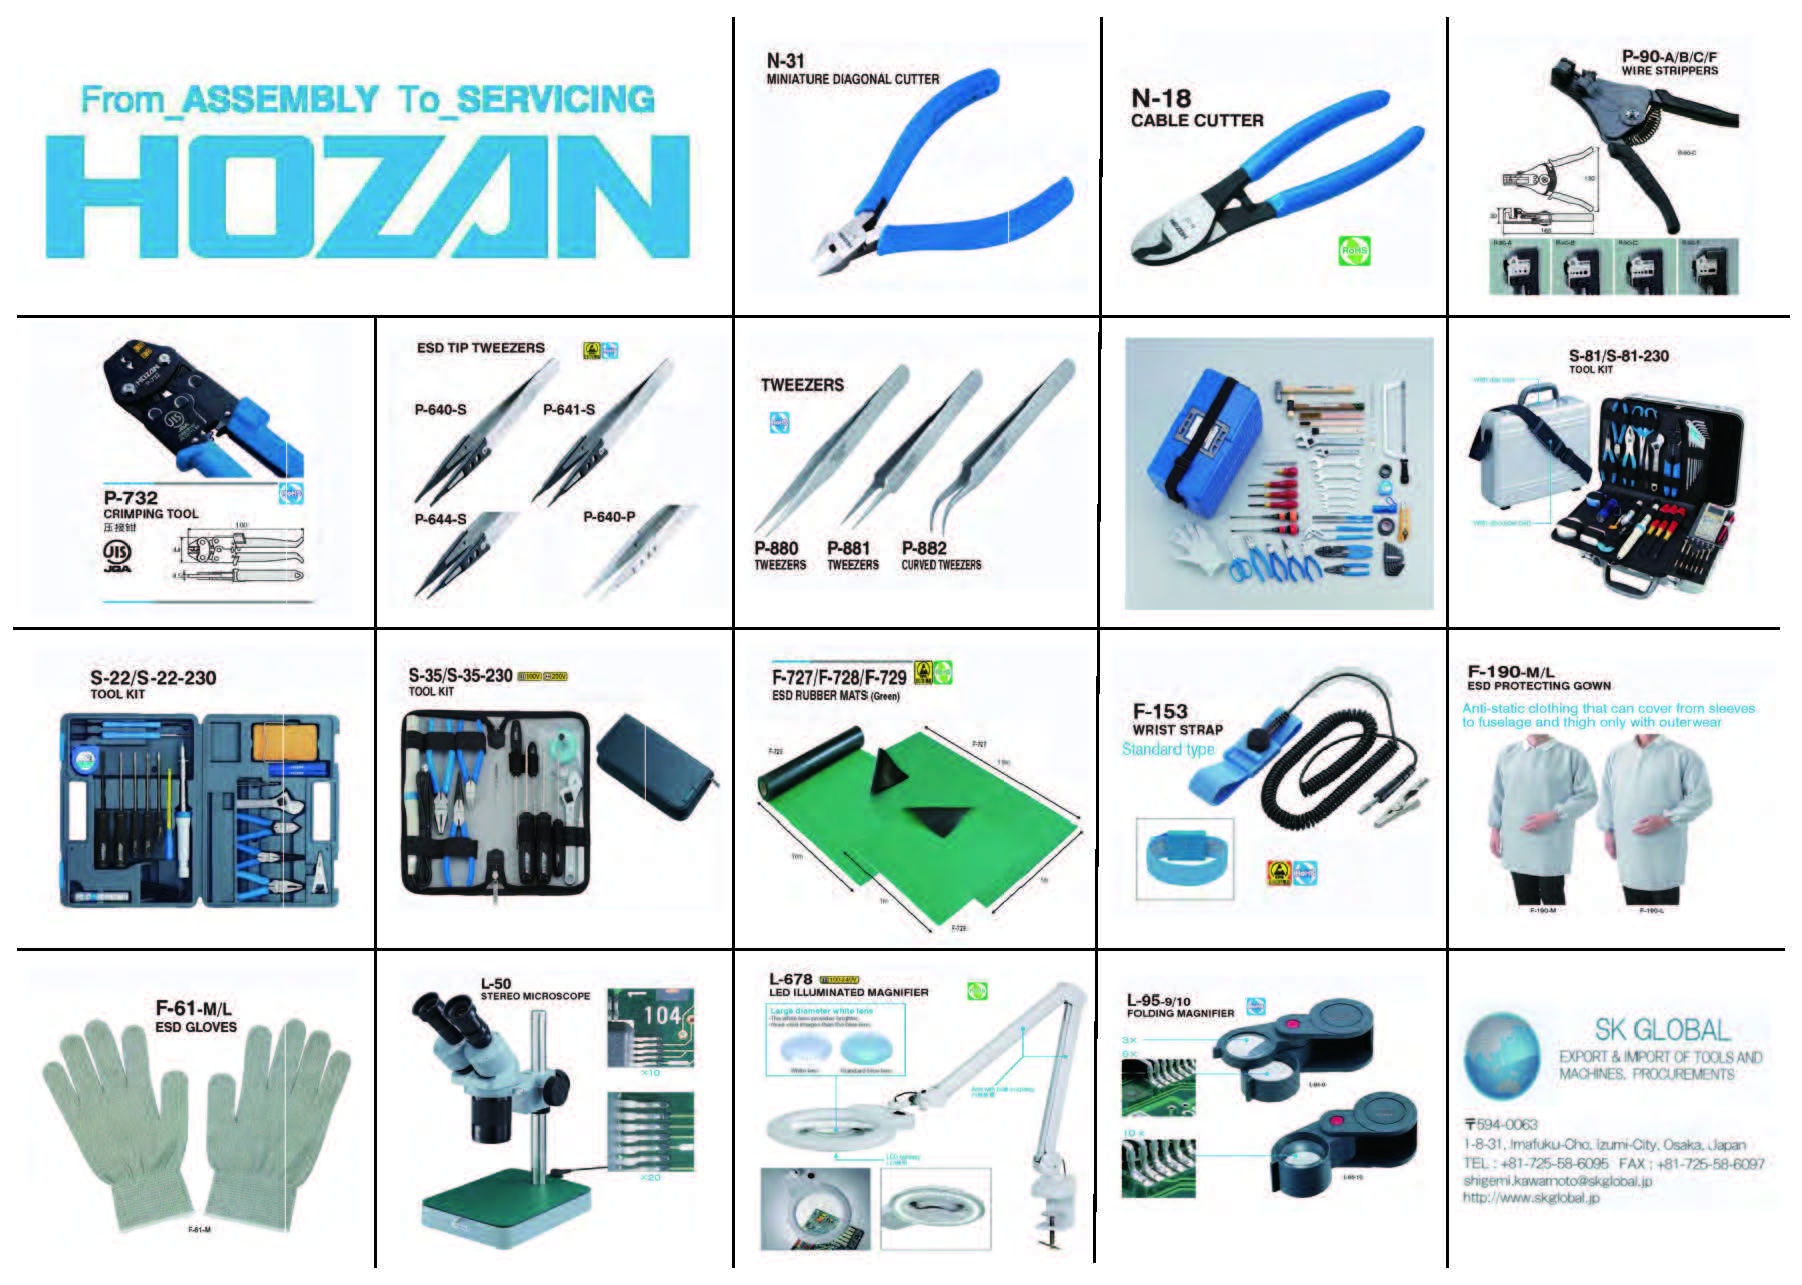 Glance at main HOZAN Tools for electronics